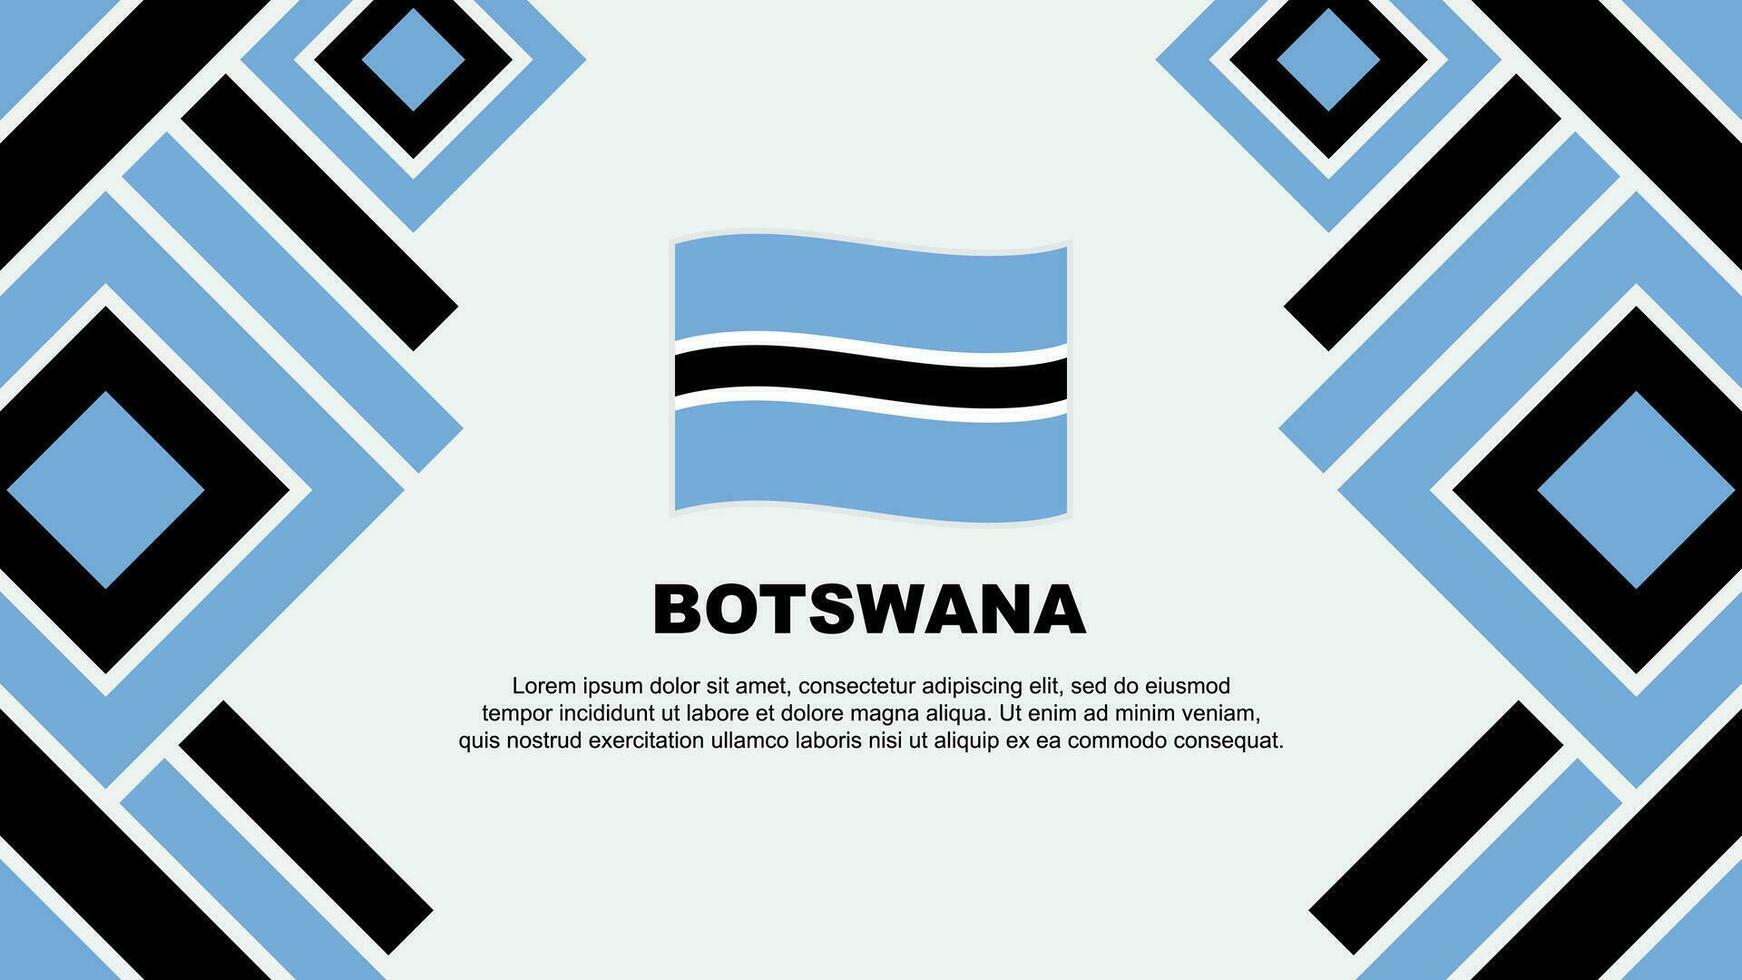 Botswana Flag Abstract Background Design Template. Botswana Independence Day Banner Wallpaper Vector Illustration. Botswana